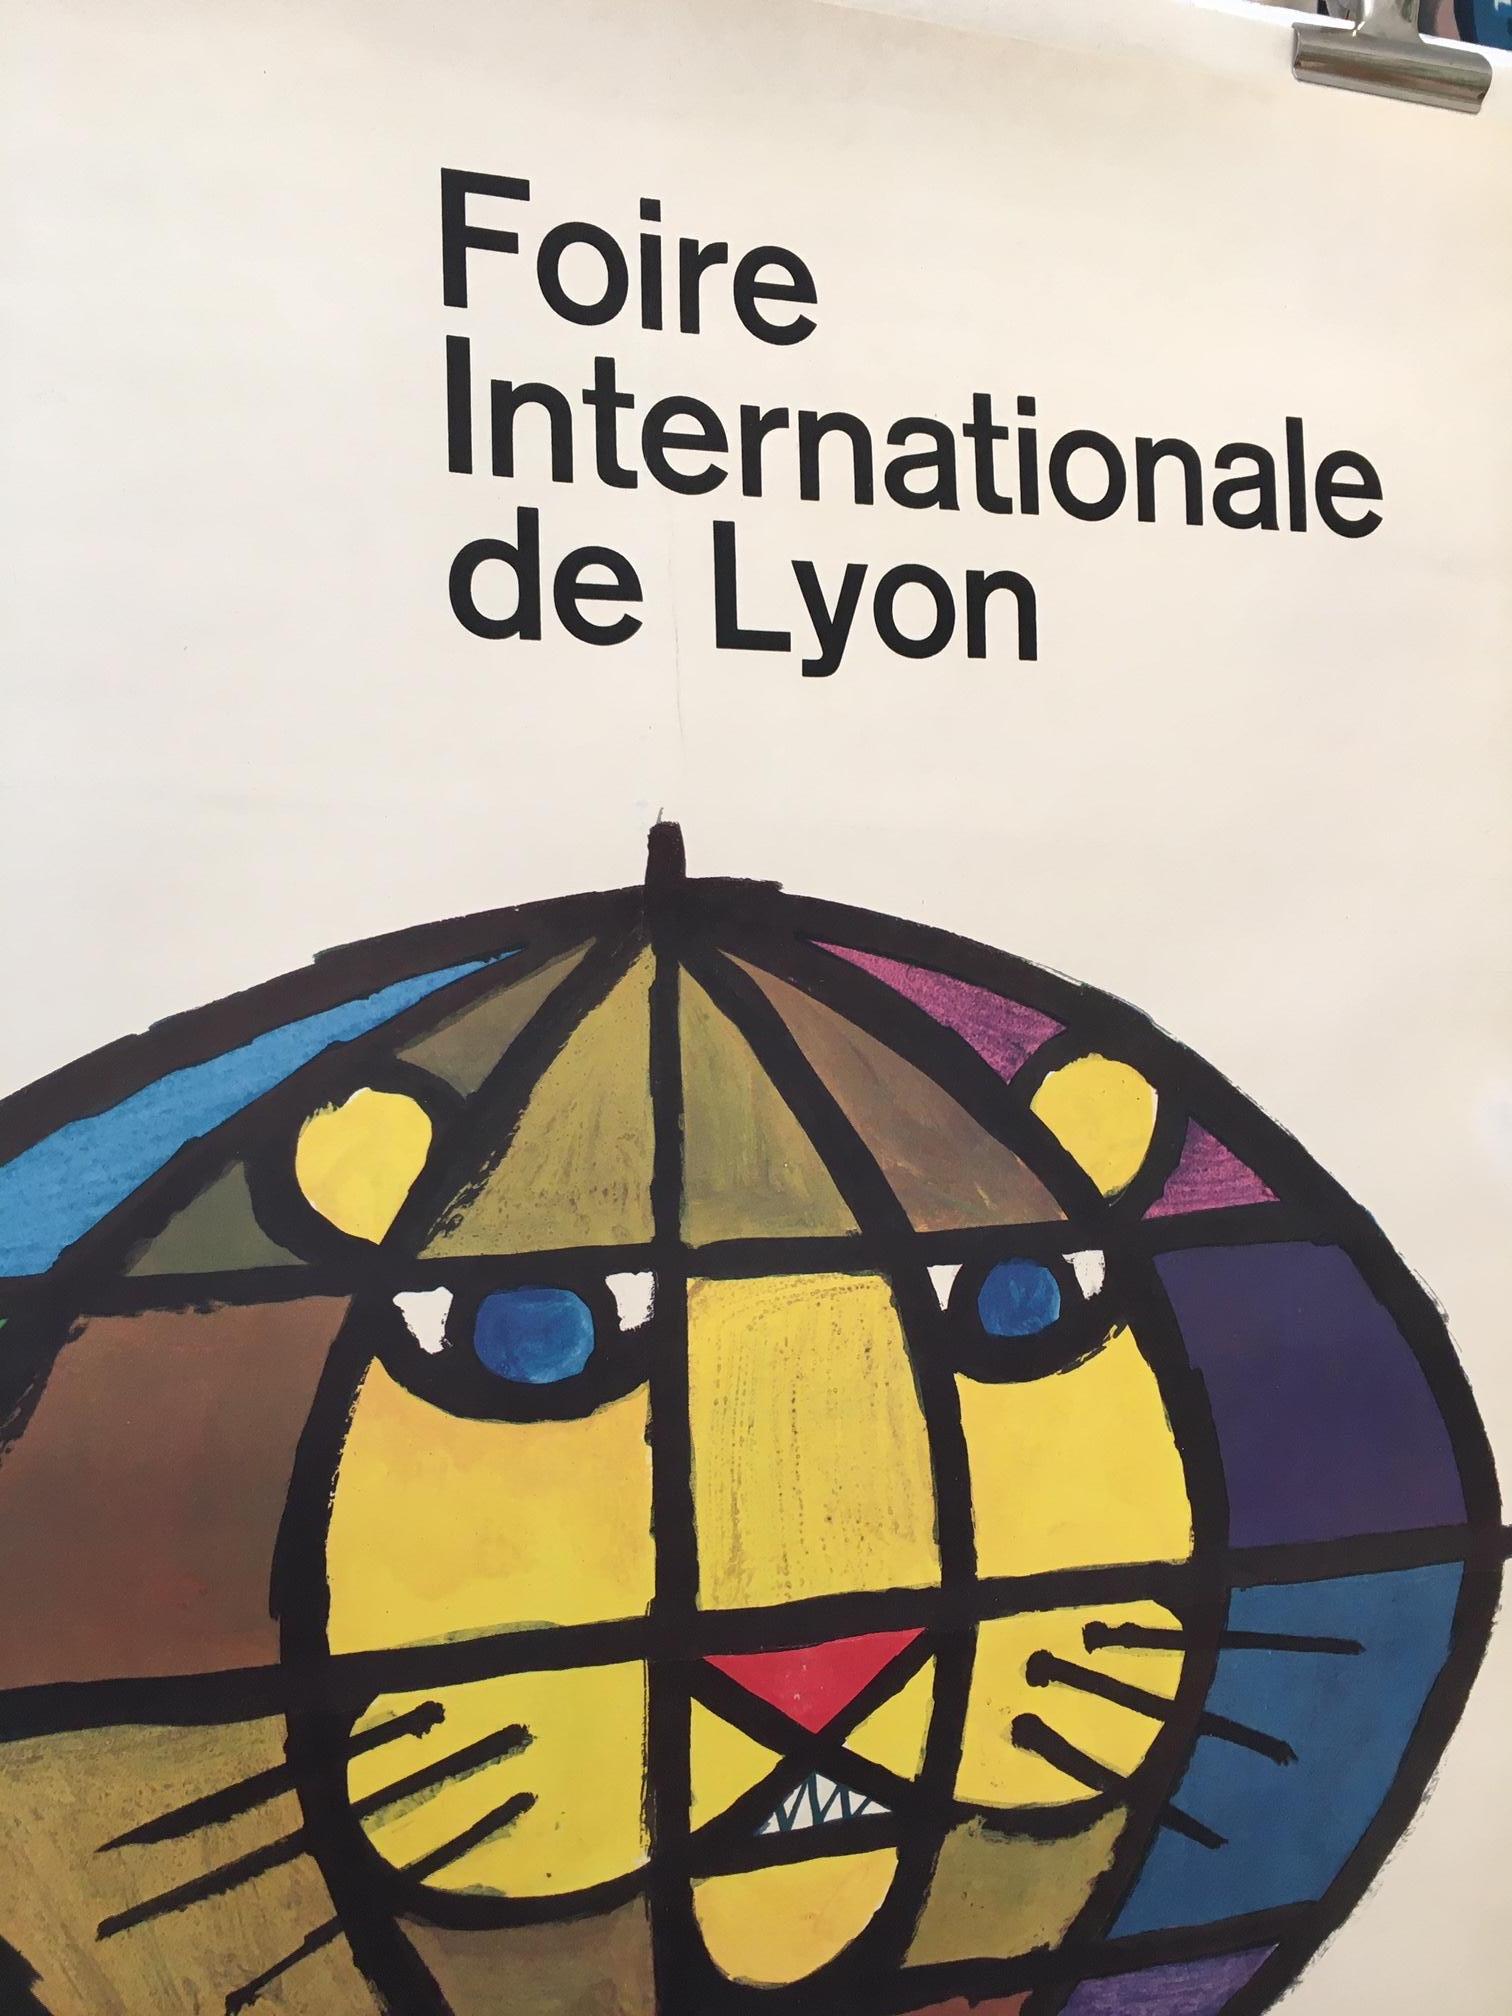 International Style Original Vintage French Poster, 'Foire Internationale De Lyon' 1959 by Piatti  For Sale